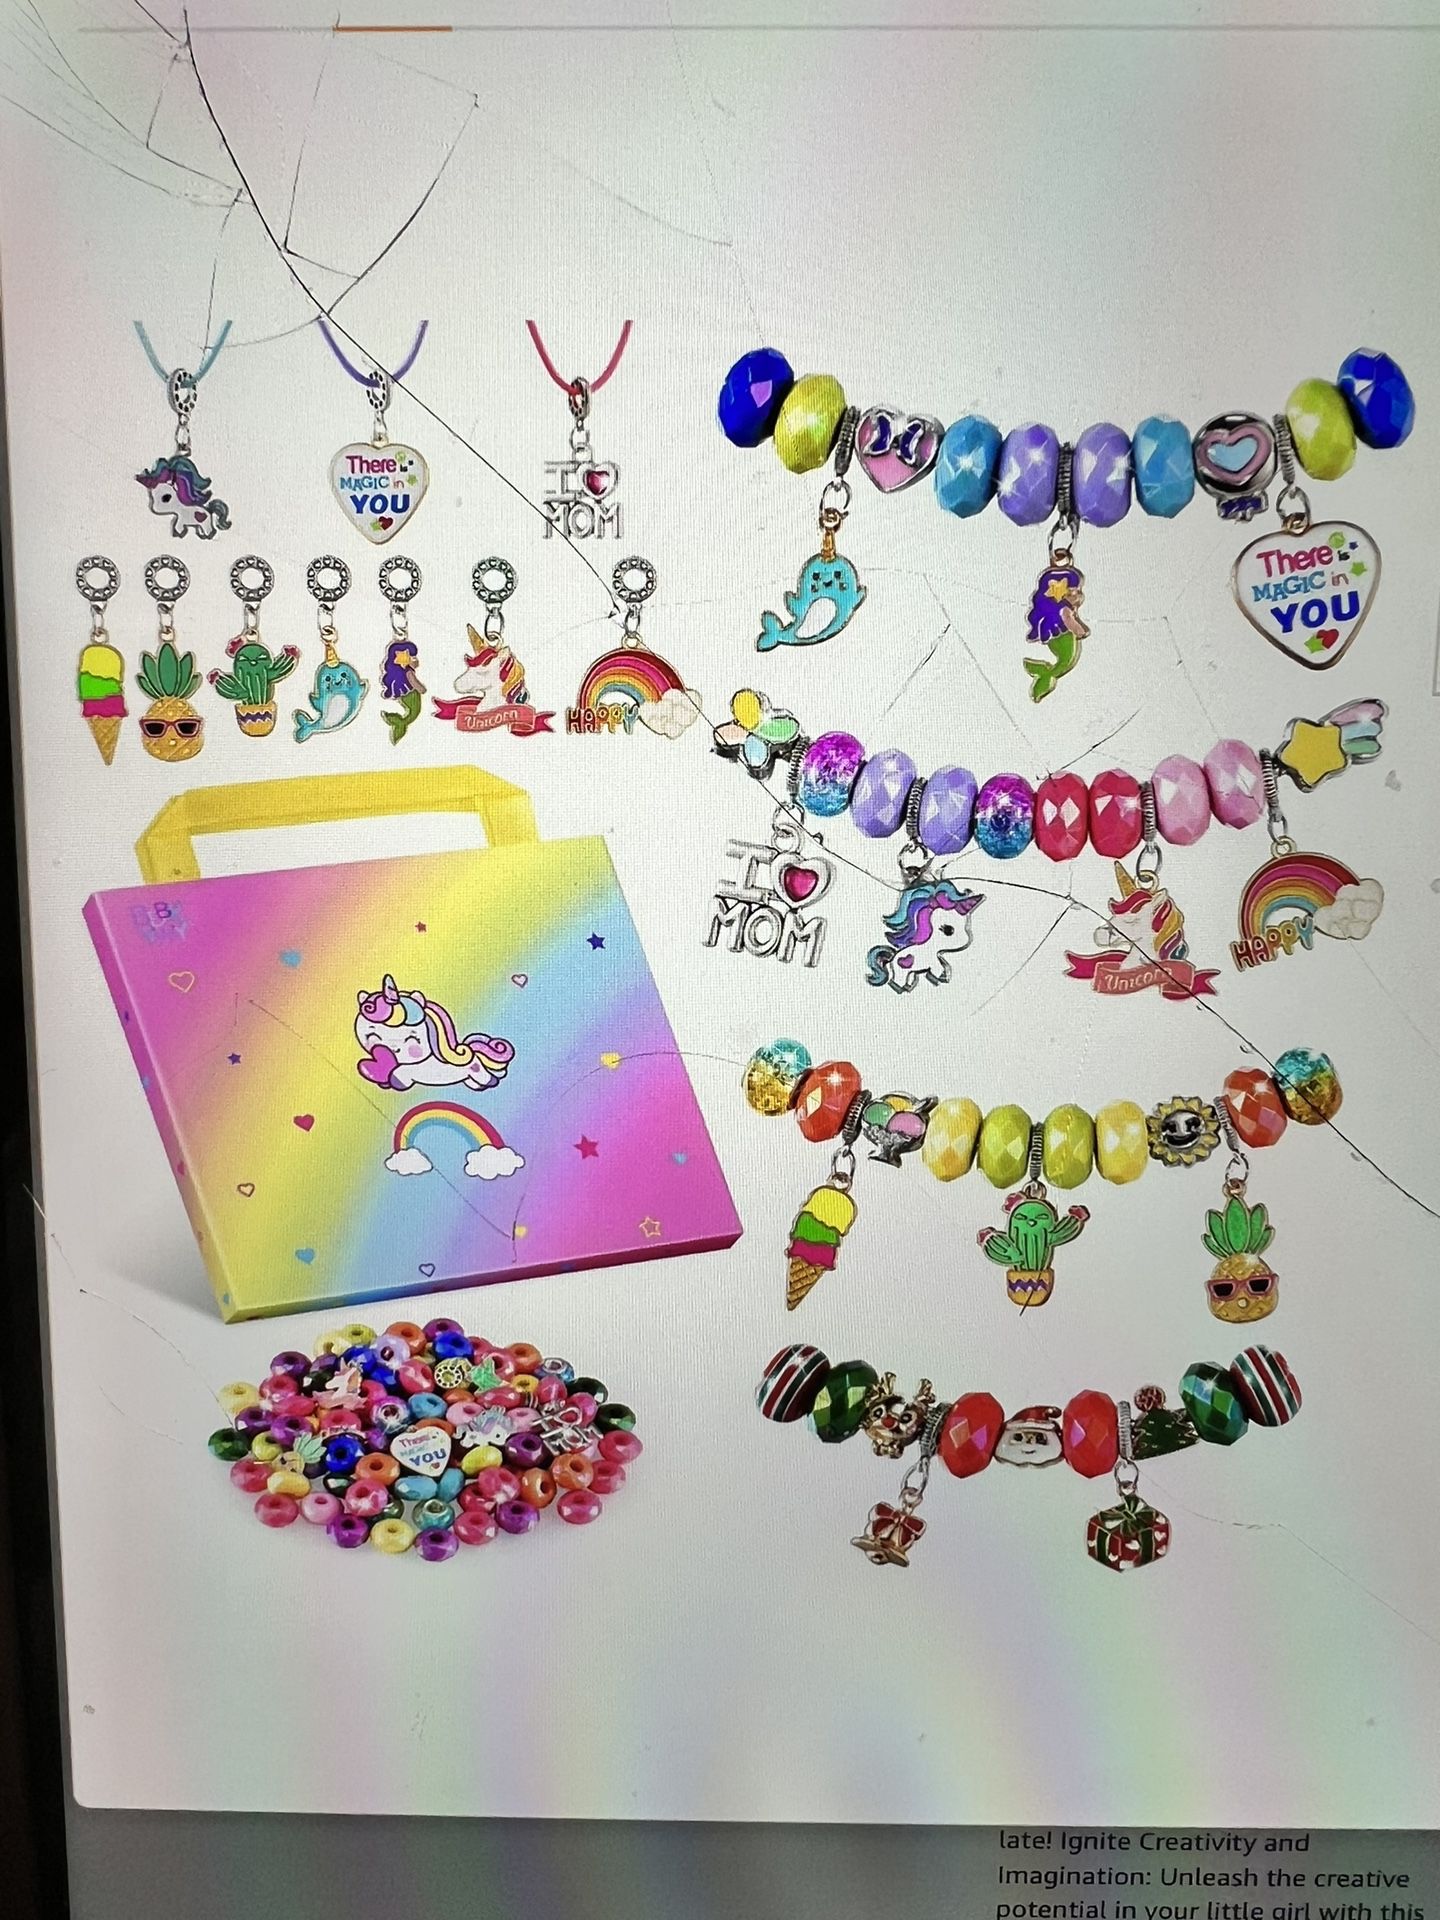 Girls Charm Bracelet Making Kit - Kids Unicorn Jewelry Supplies Make Set DIY Art Craft Set Birthday Gifts for 3 4 5 6 7 8 Year Old Girl Toys Age 6-8